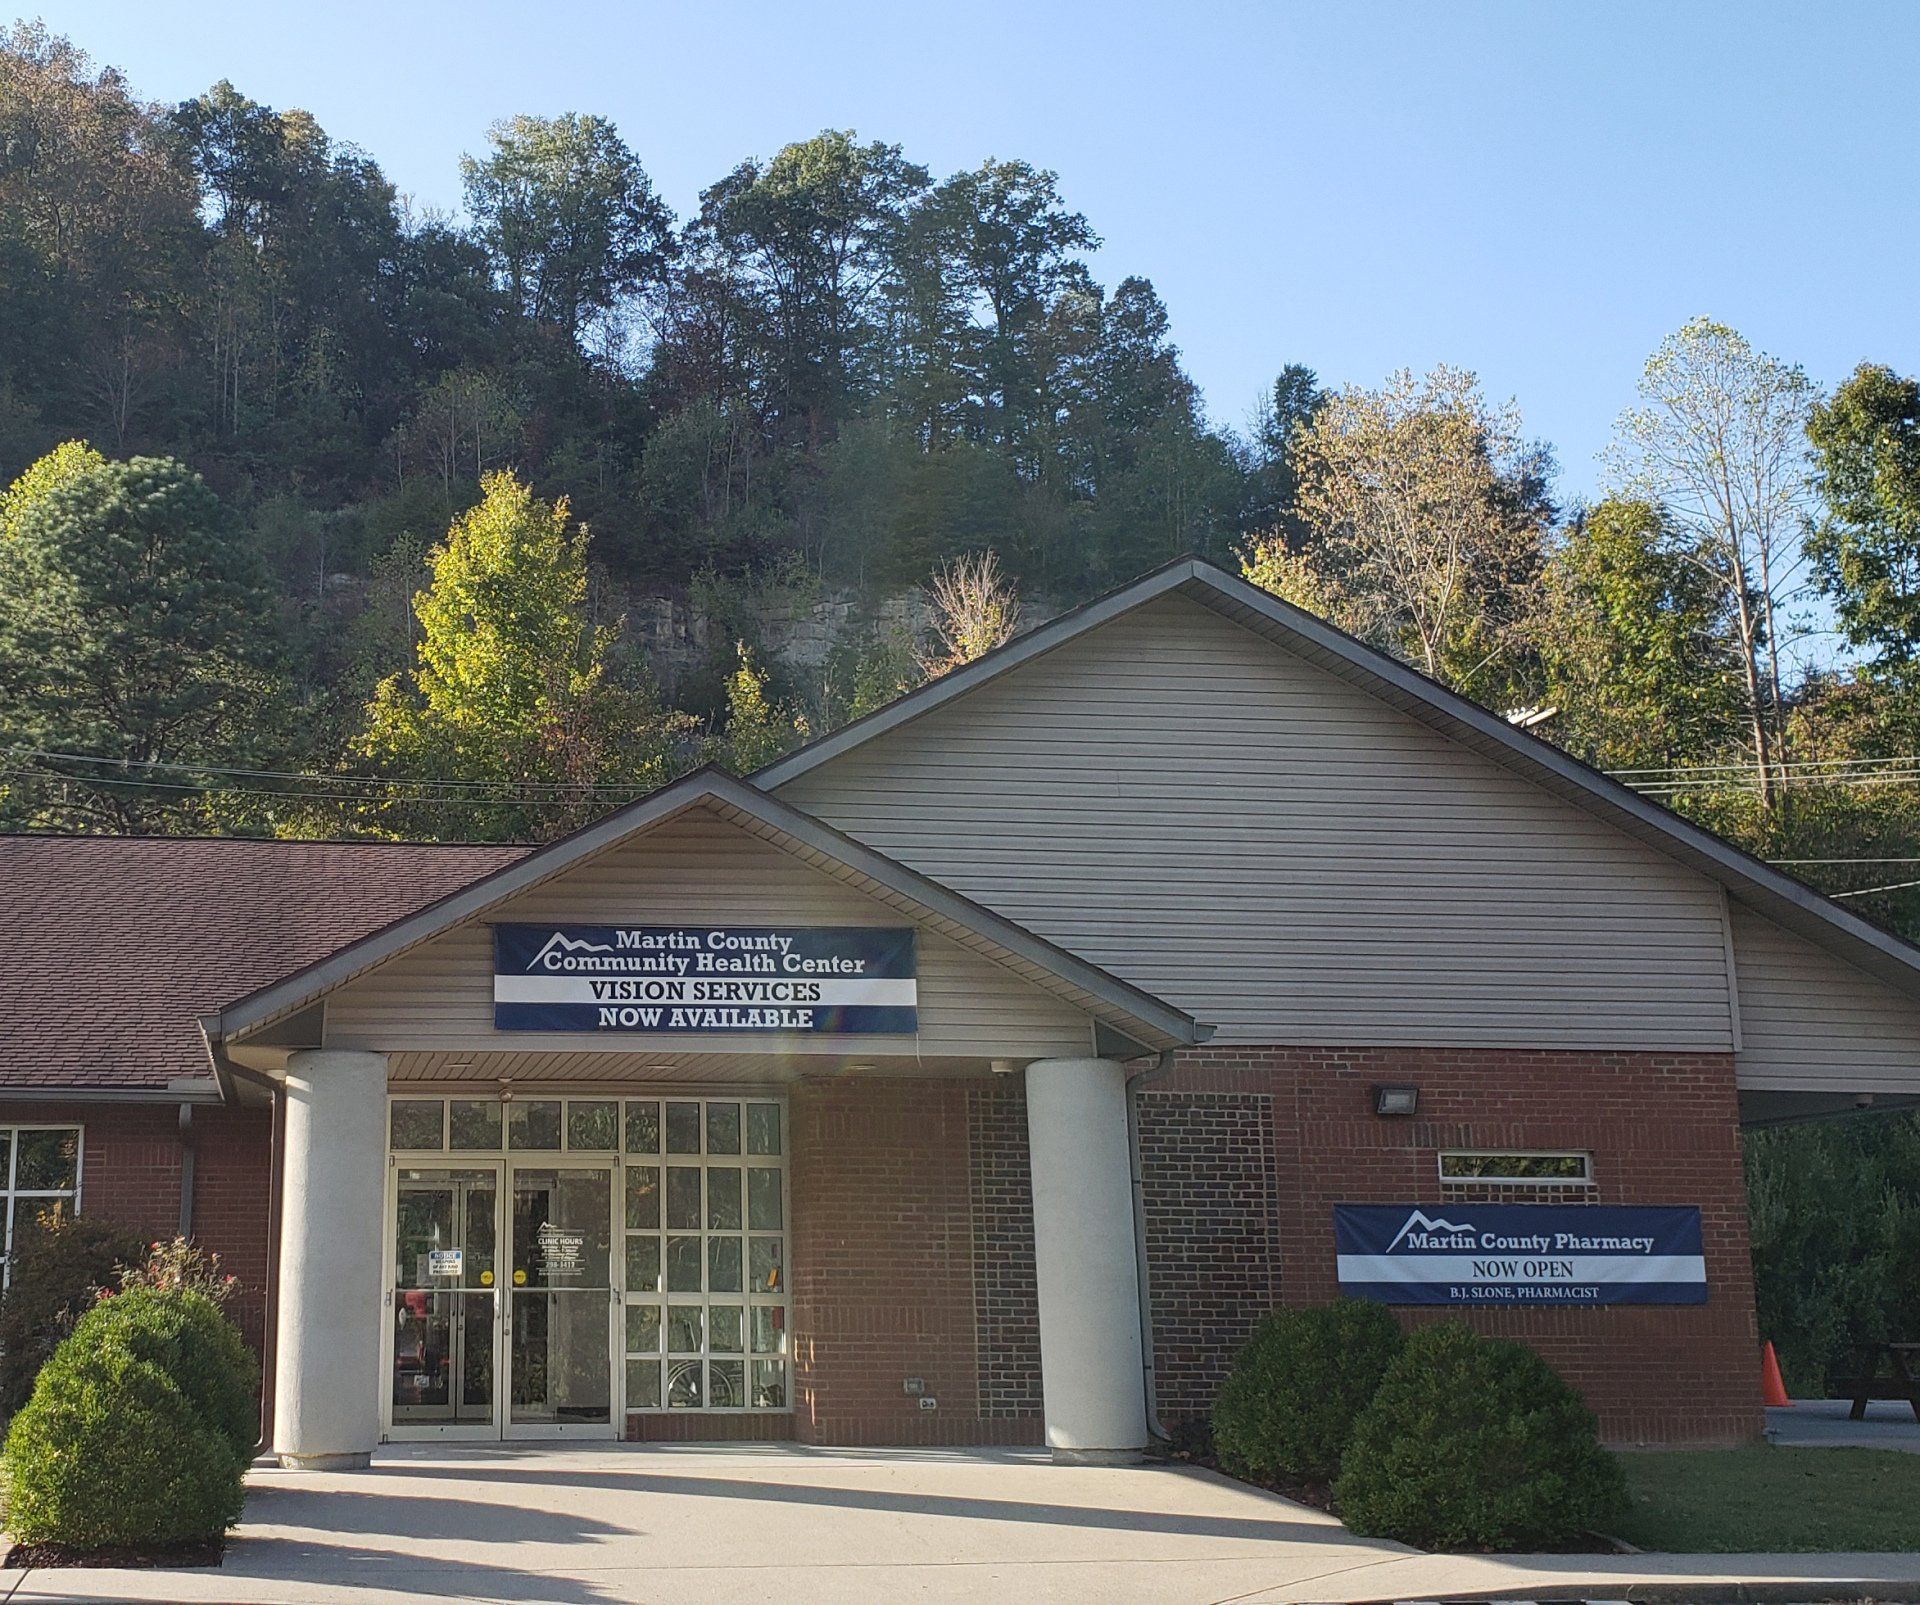 Martin County Community Health Center